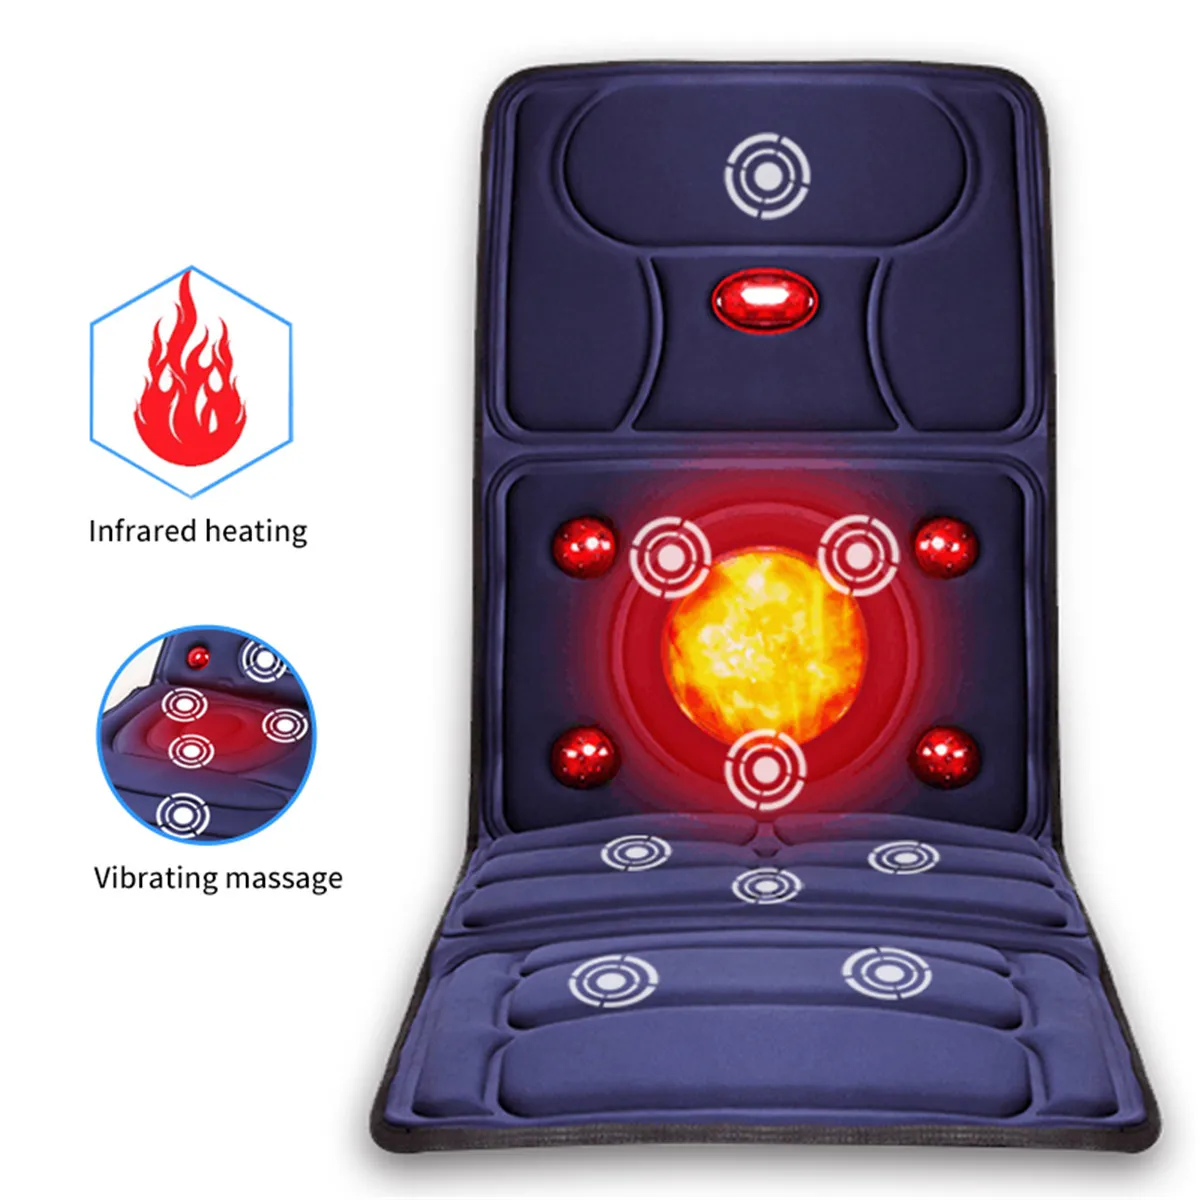 100-240V Portable Electric Heating Vibration Massage Chair Cushion Car Home Office Lumbar Neck Mattress Pain Relief 9 Motors